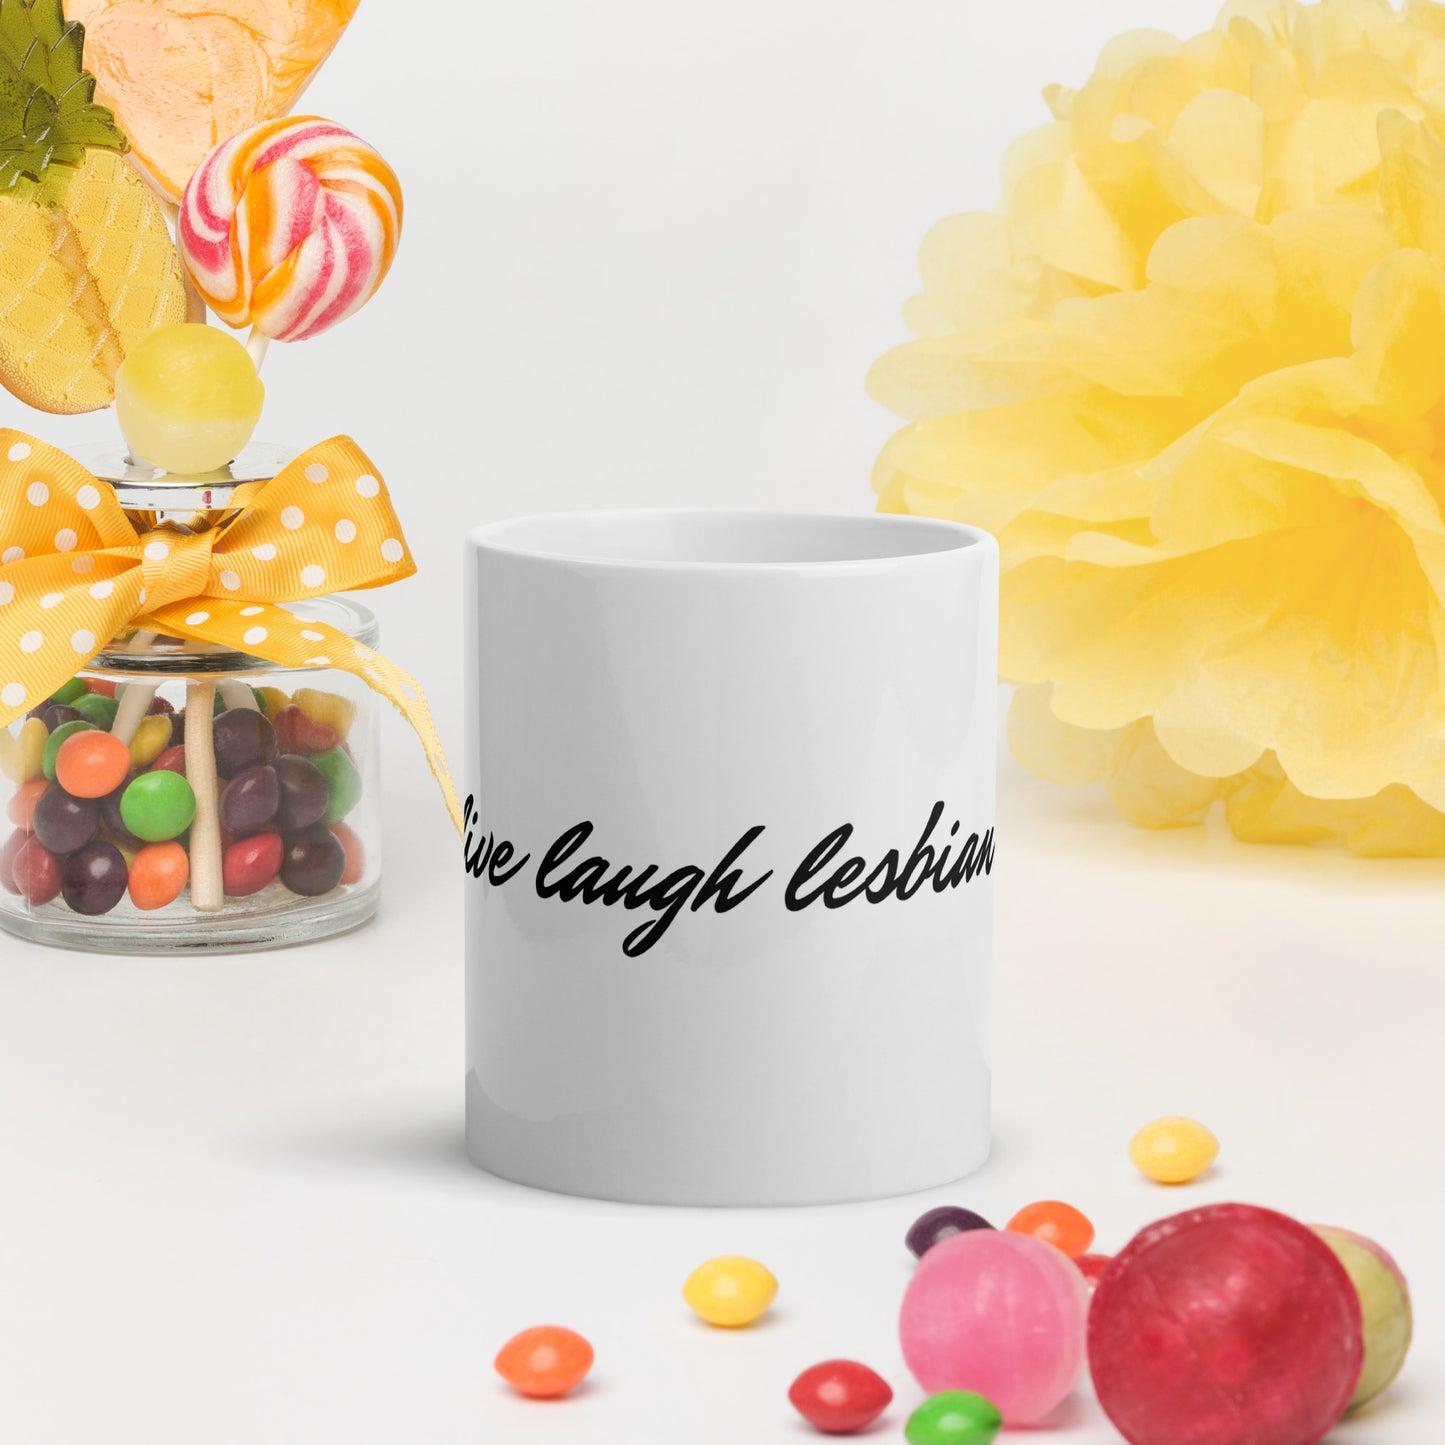 "Live Laugh Lesbian" white glossy mug